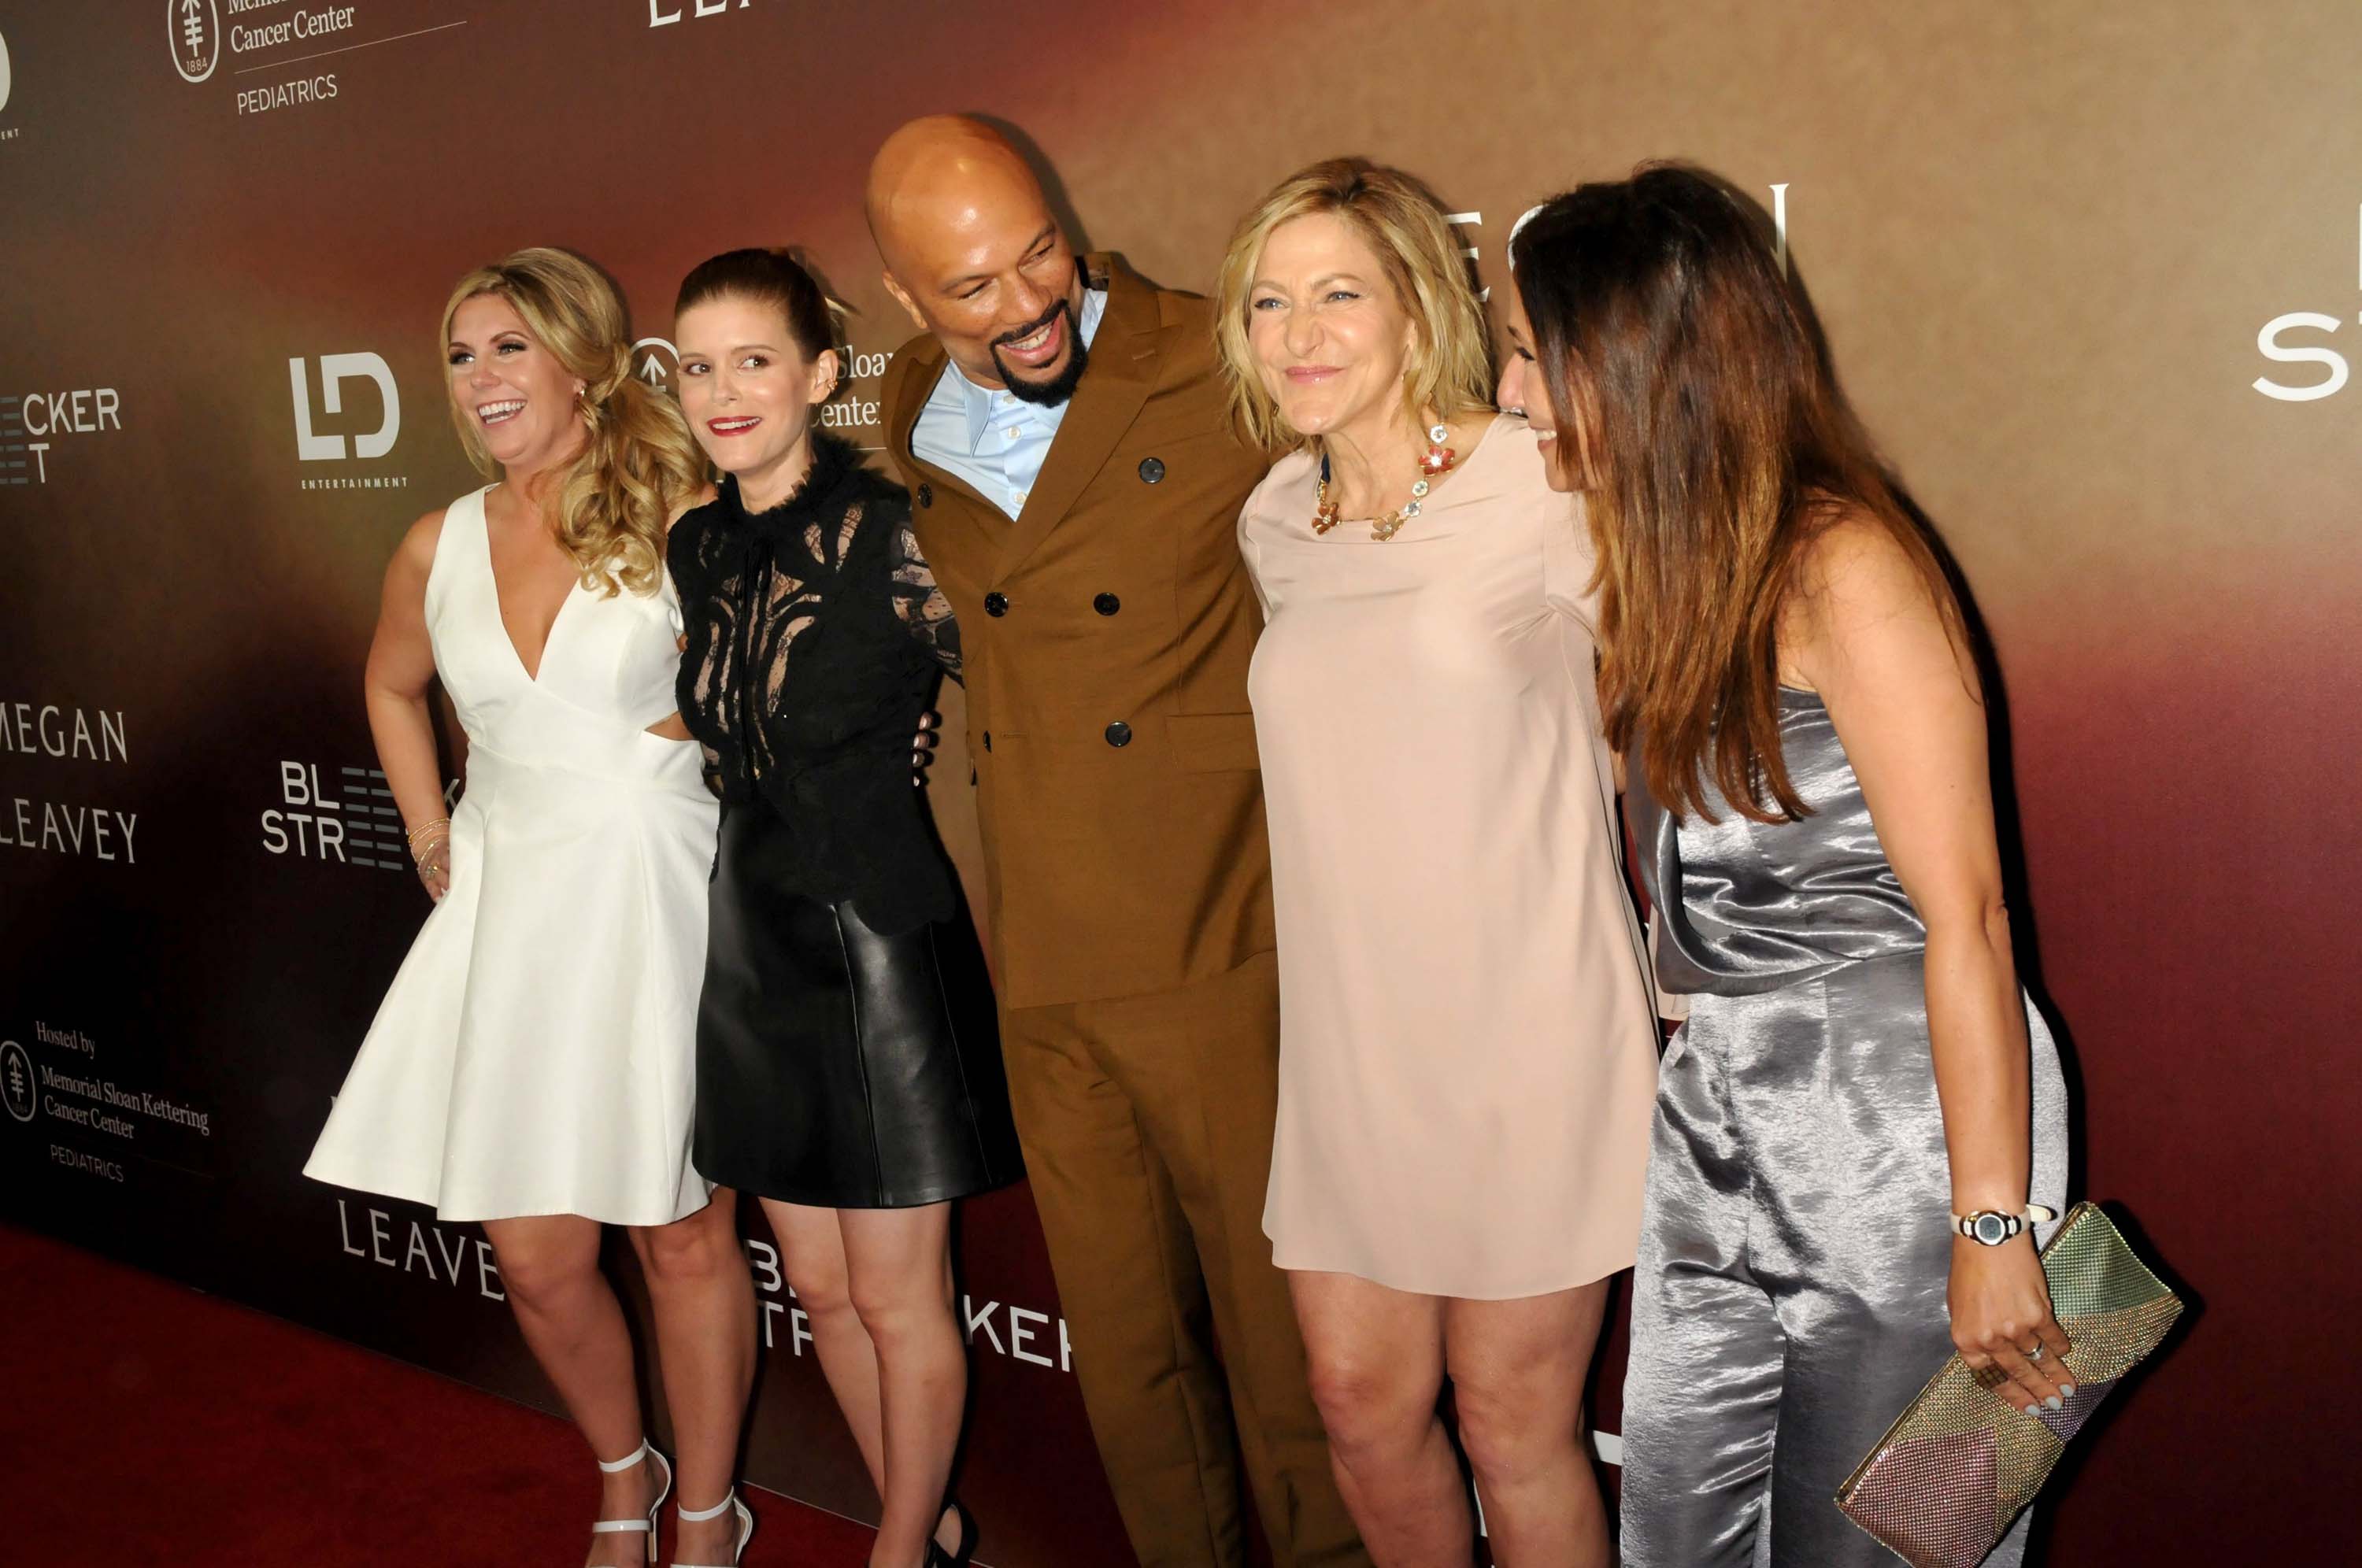 Kate Mara attends Megan Leavey premiere